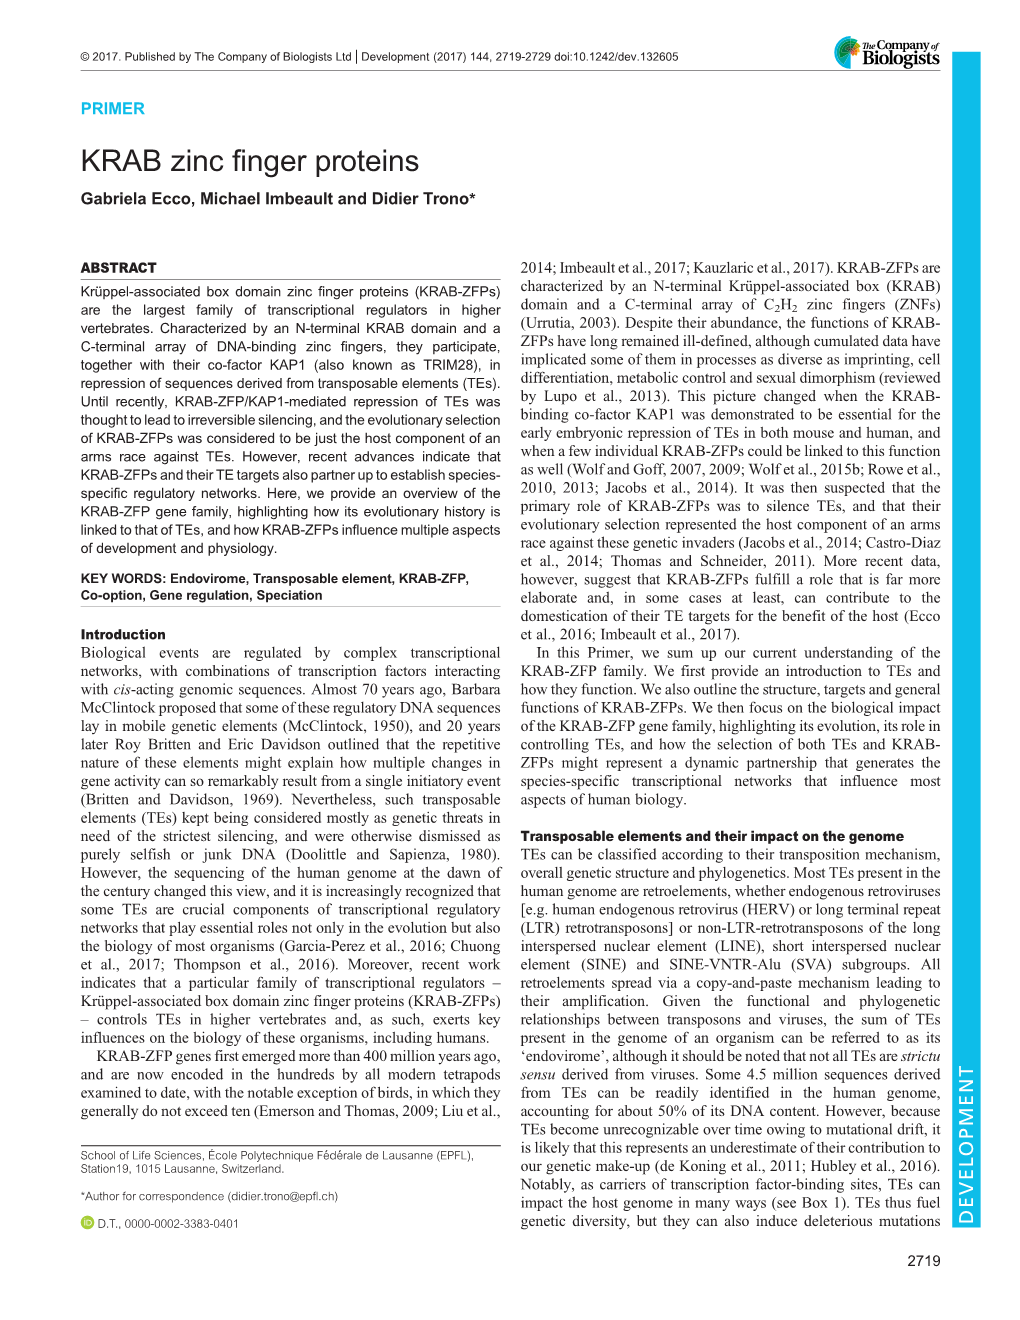 KRAB Zinc Finger Proteins Gabriela Ecco, Michael Imbeault and Didier Trono*